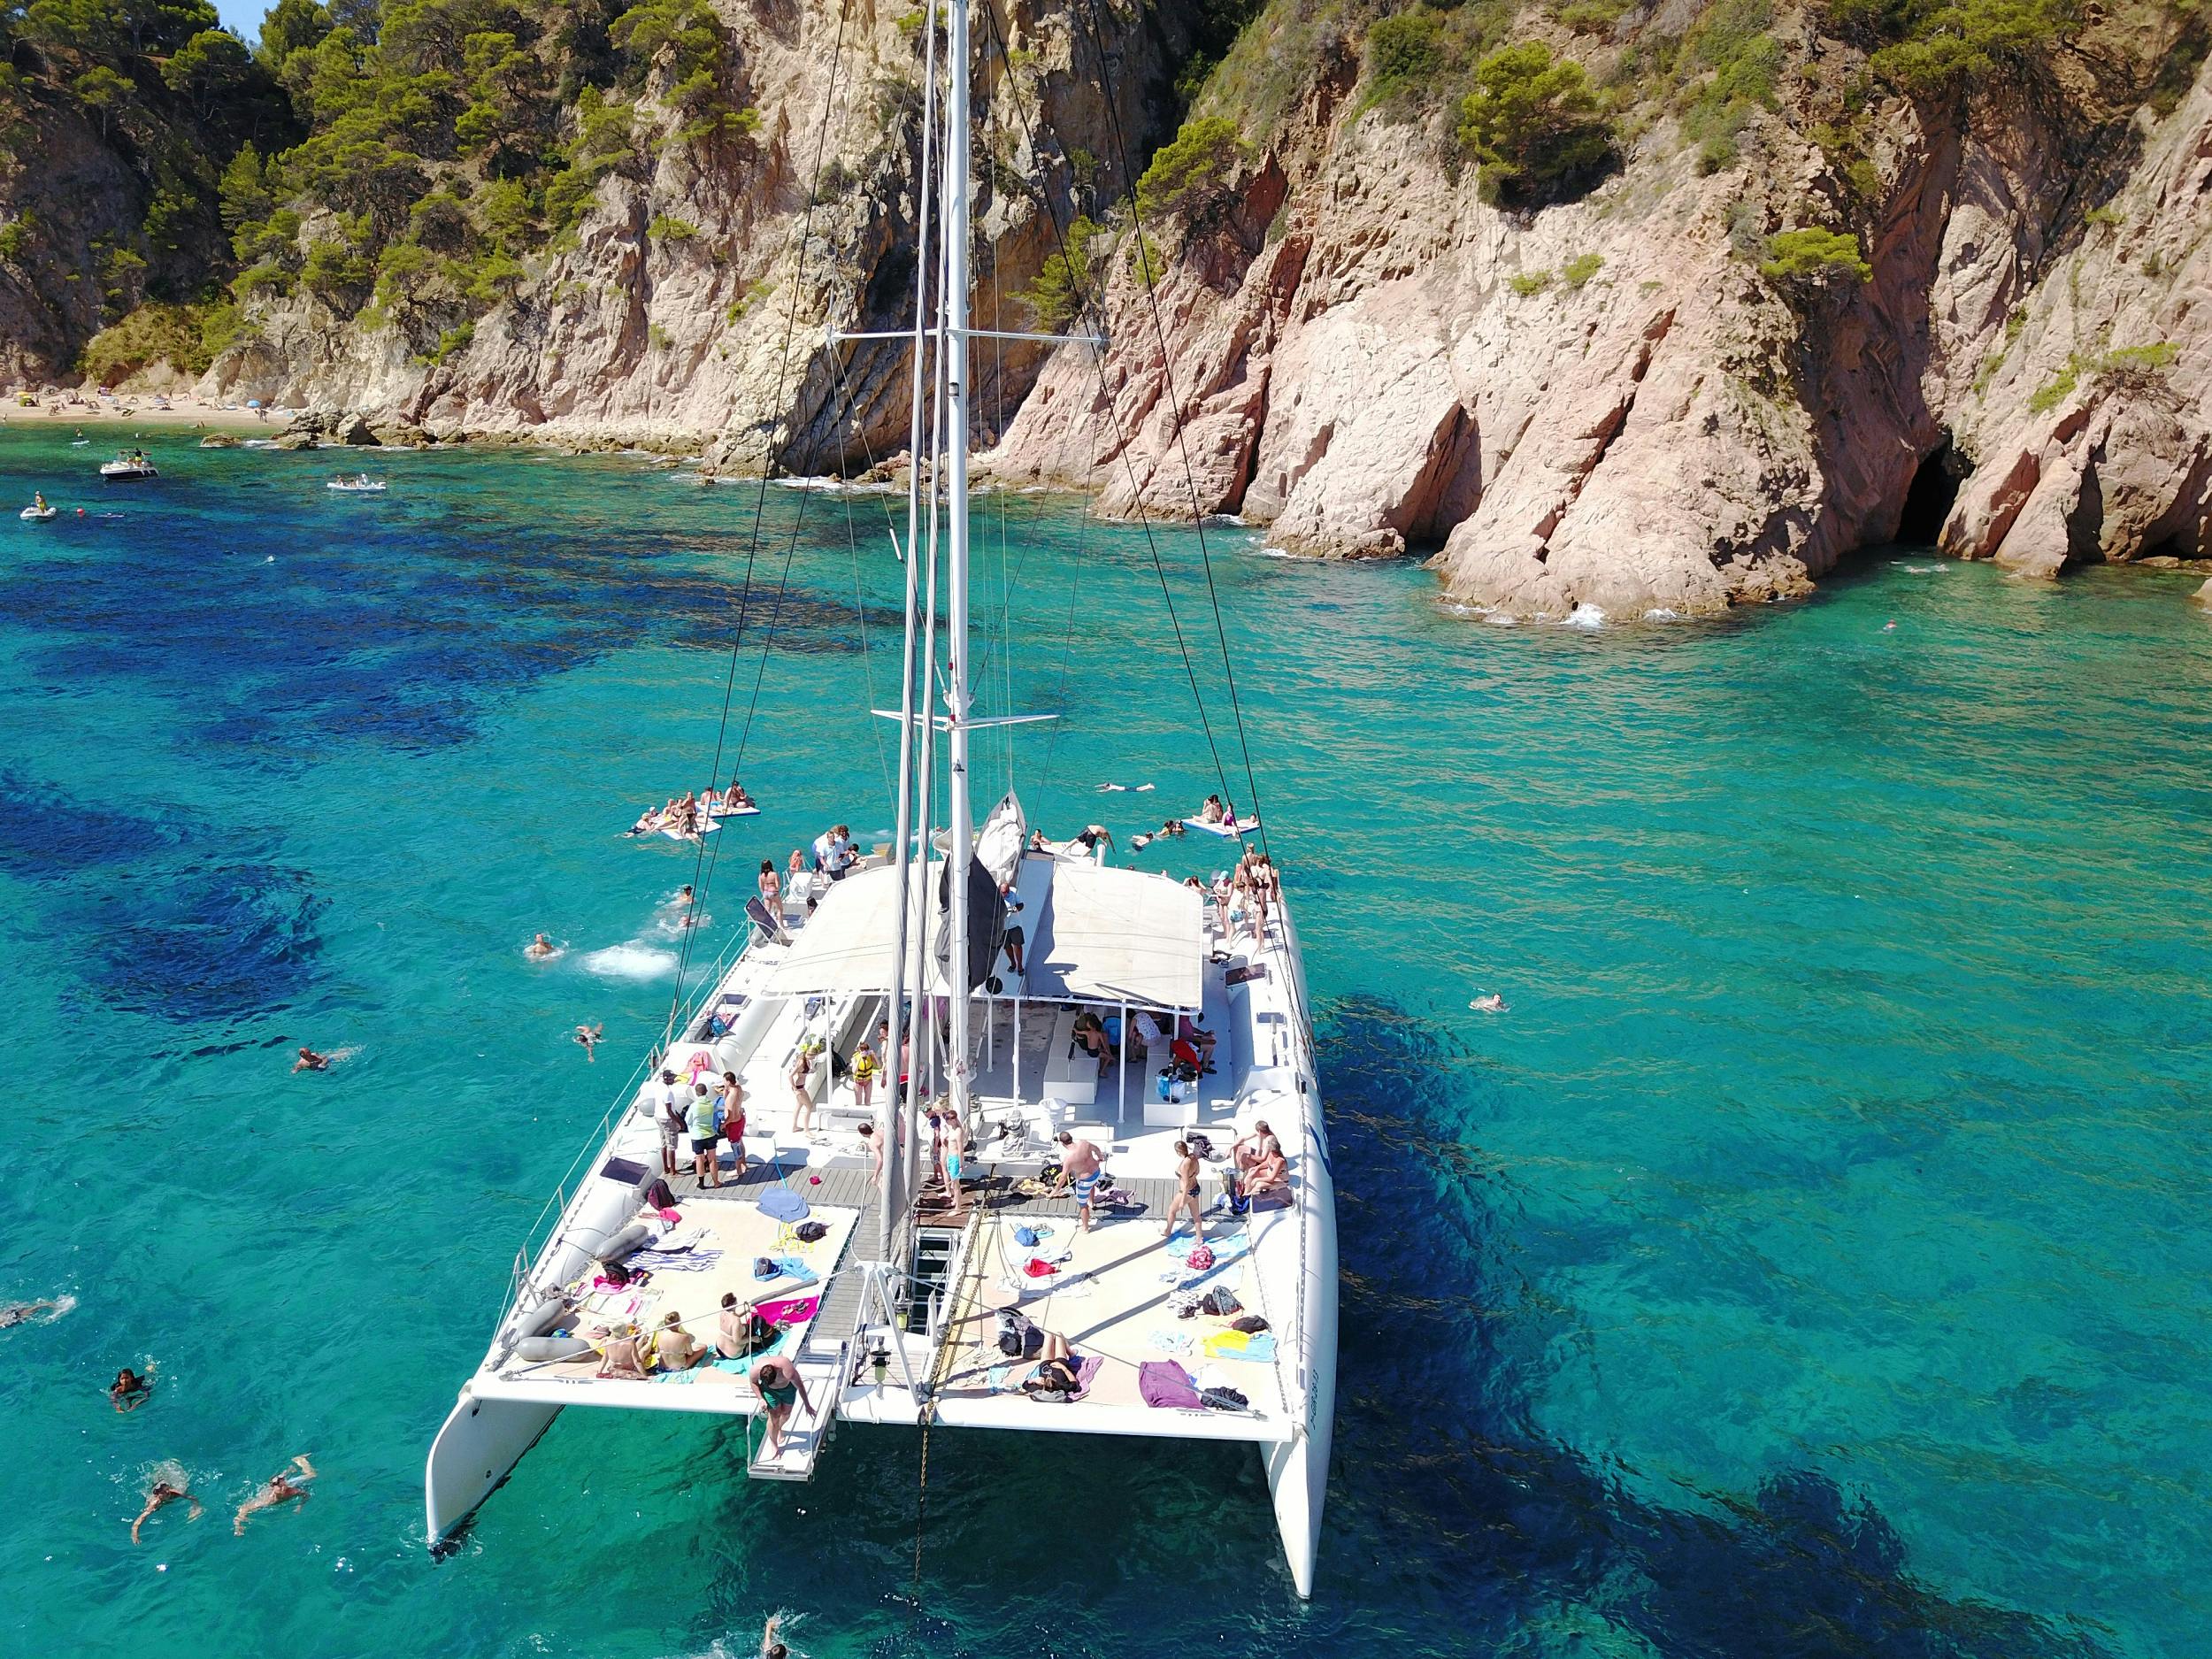 Catamaran cruise for groups in Costa Brava